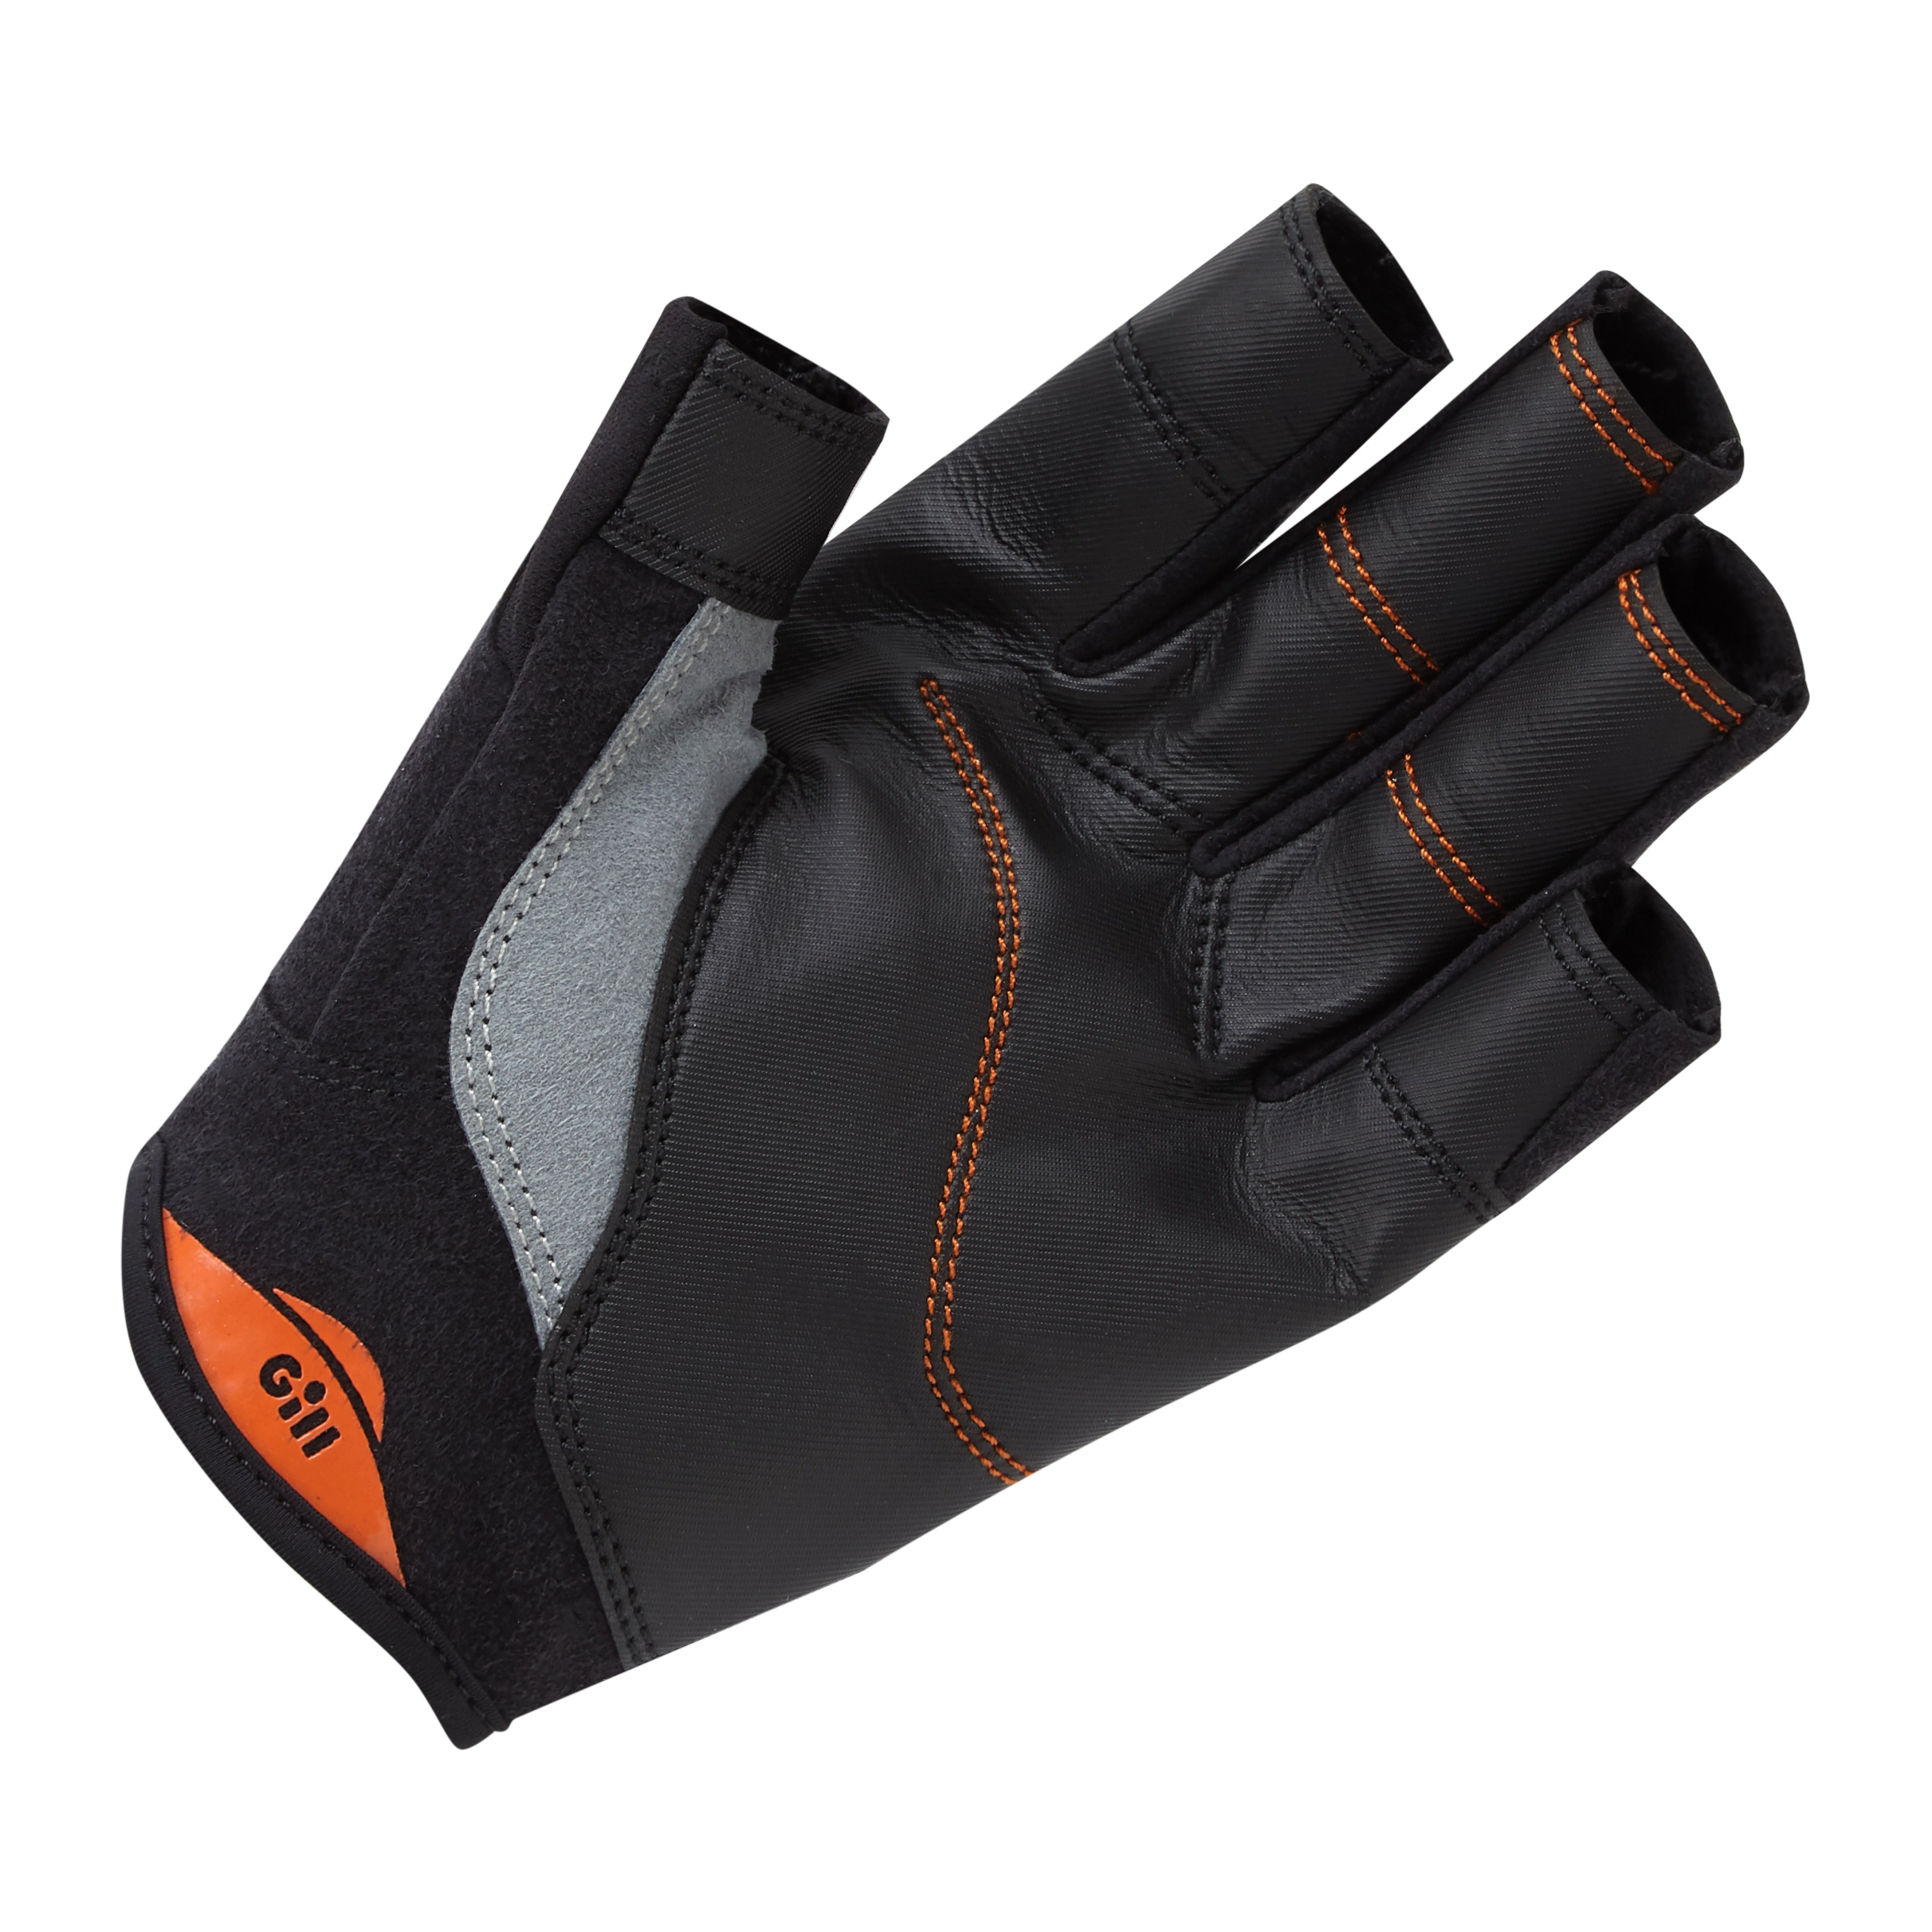 palm of Gill Championship Gloves - Short Finger